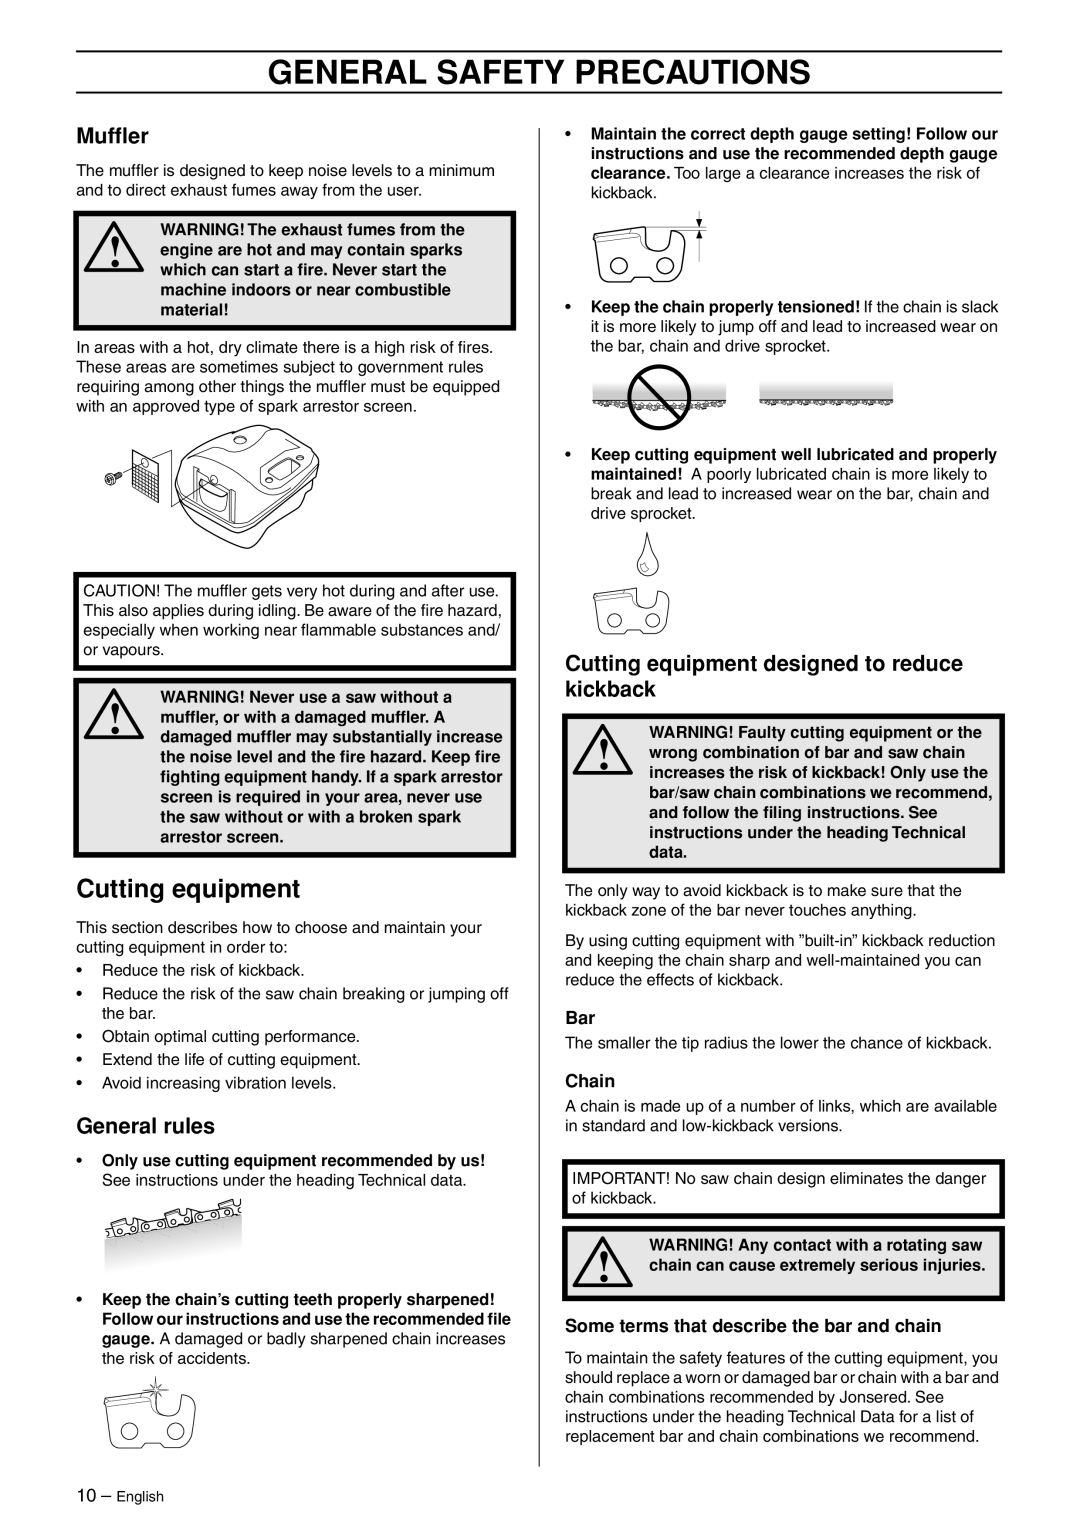 Jonsered CS 2135T manual Mufﬂer, General rules, Cutting equipment designed to reduce kickback, Chain 